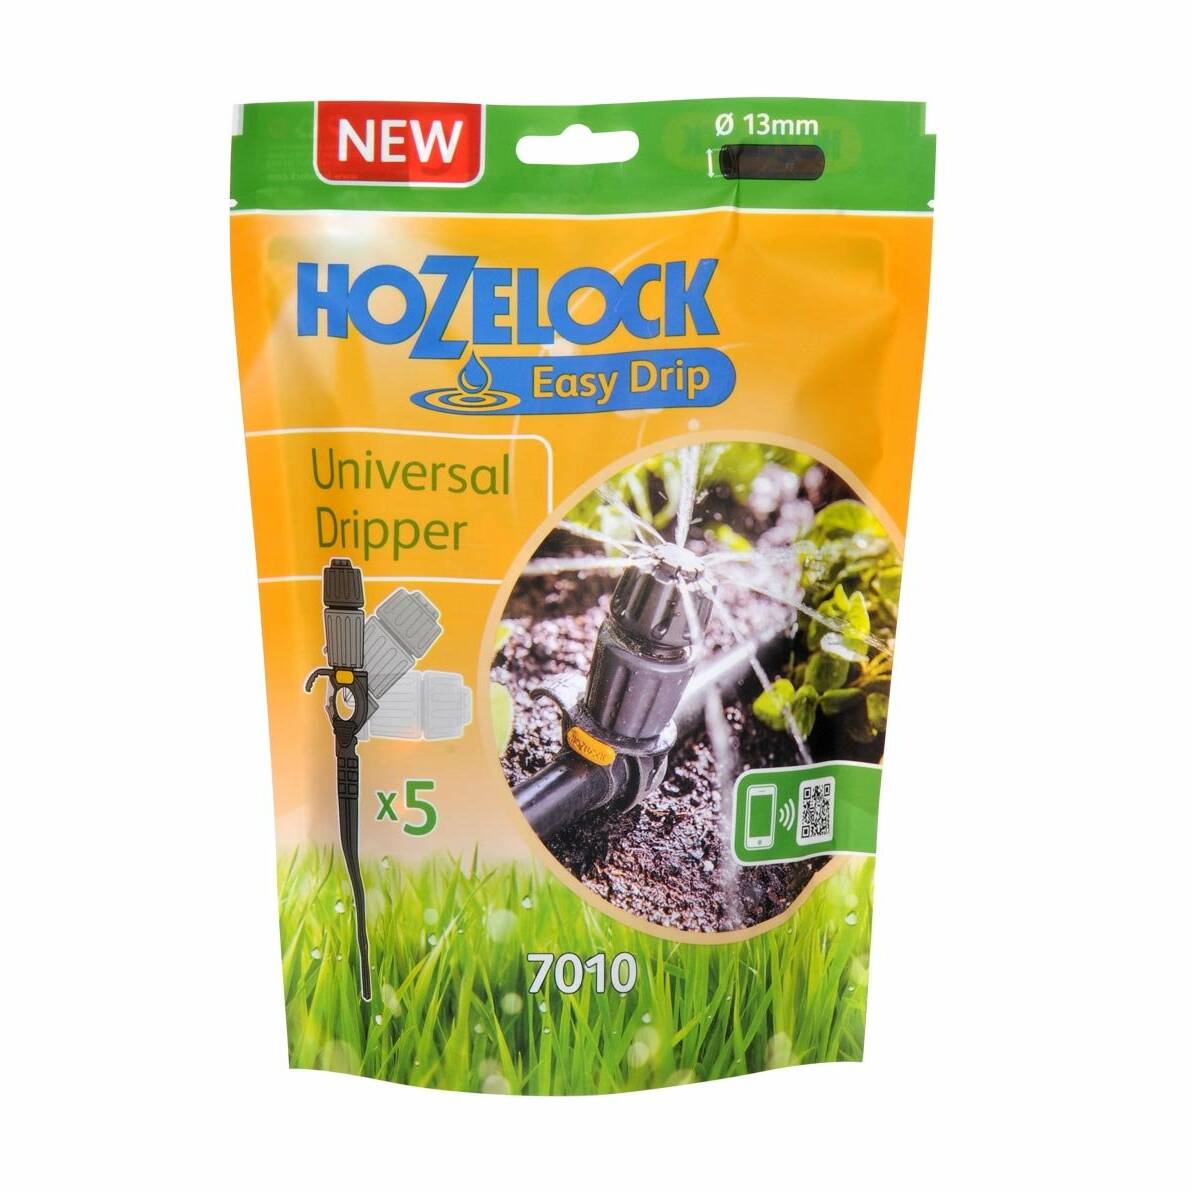 Hozelock Universal Dripper (5 Pack) (7010)